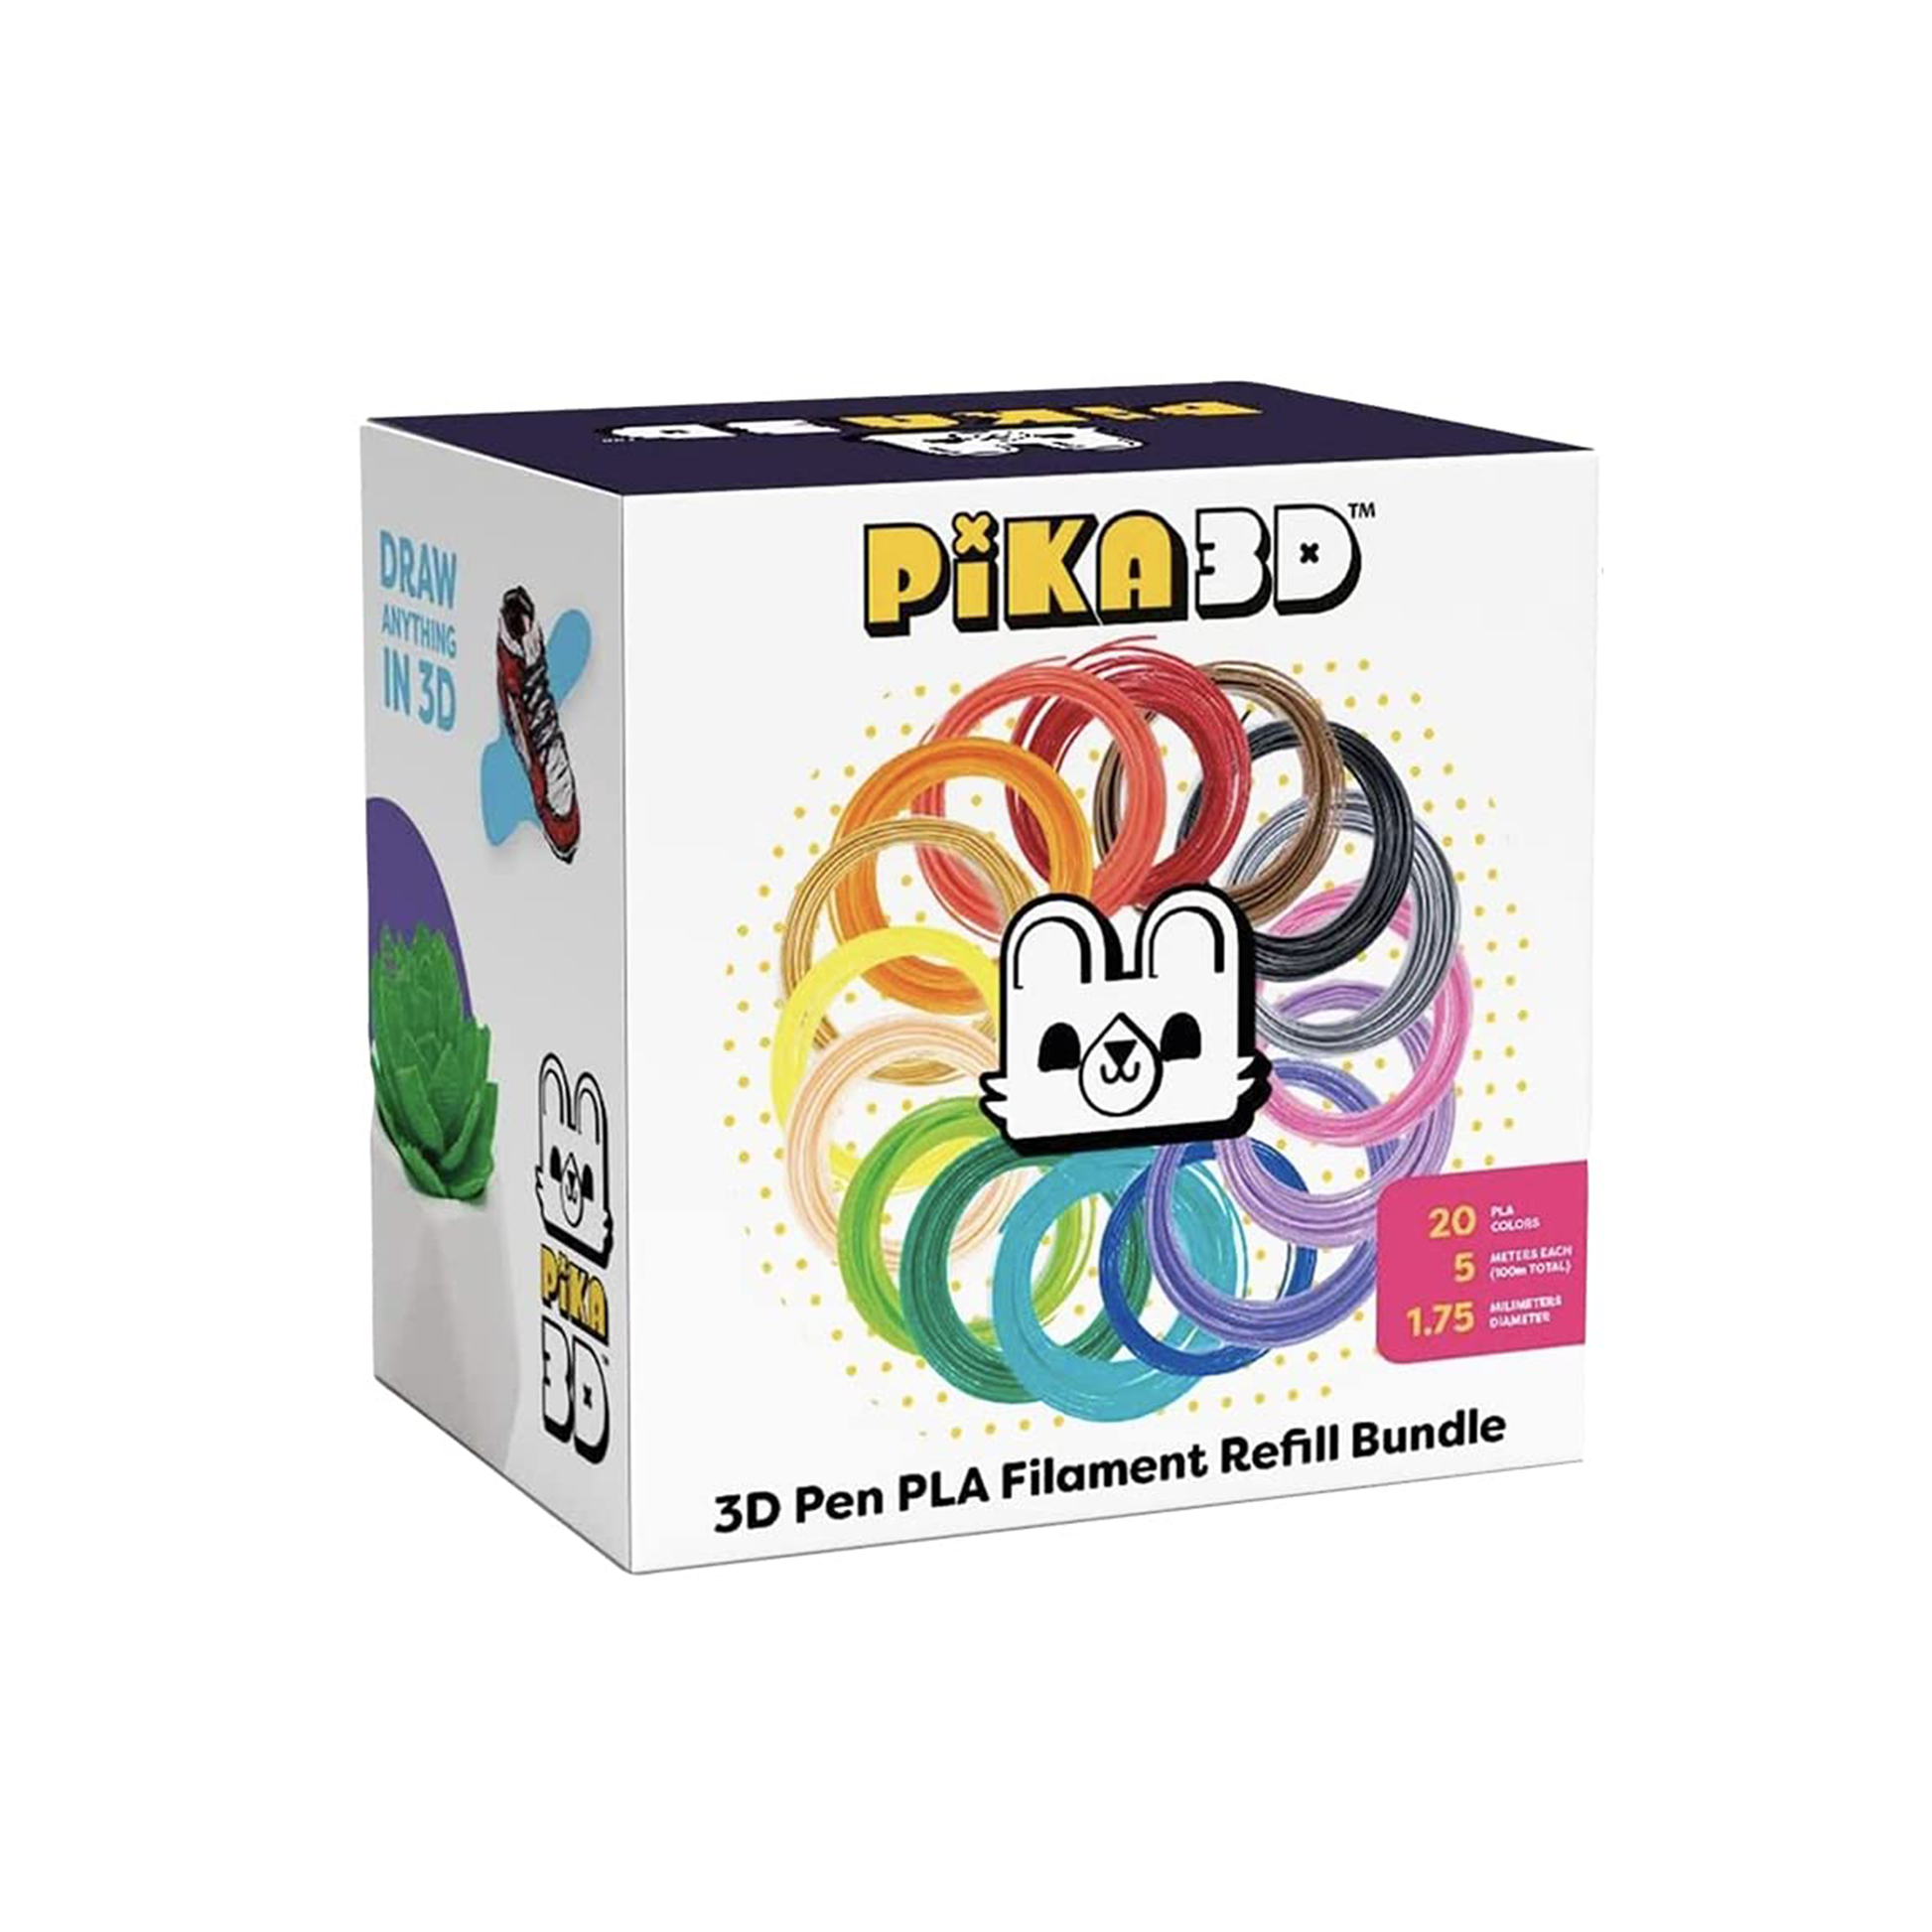 PIKA3D PRO - 3D Printing Pen for aspiring creators and designers